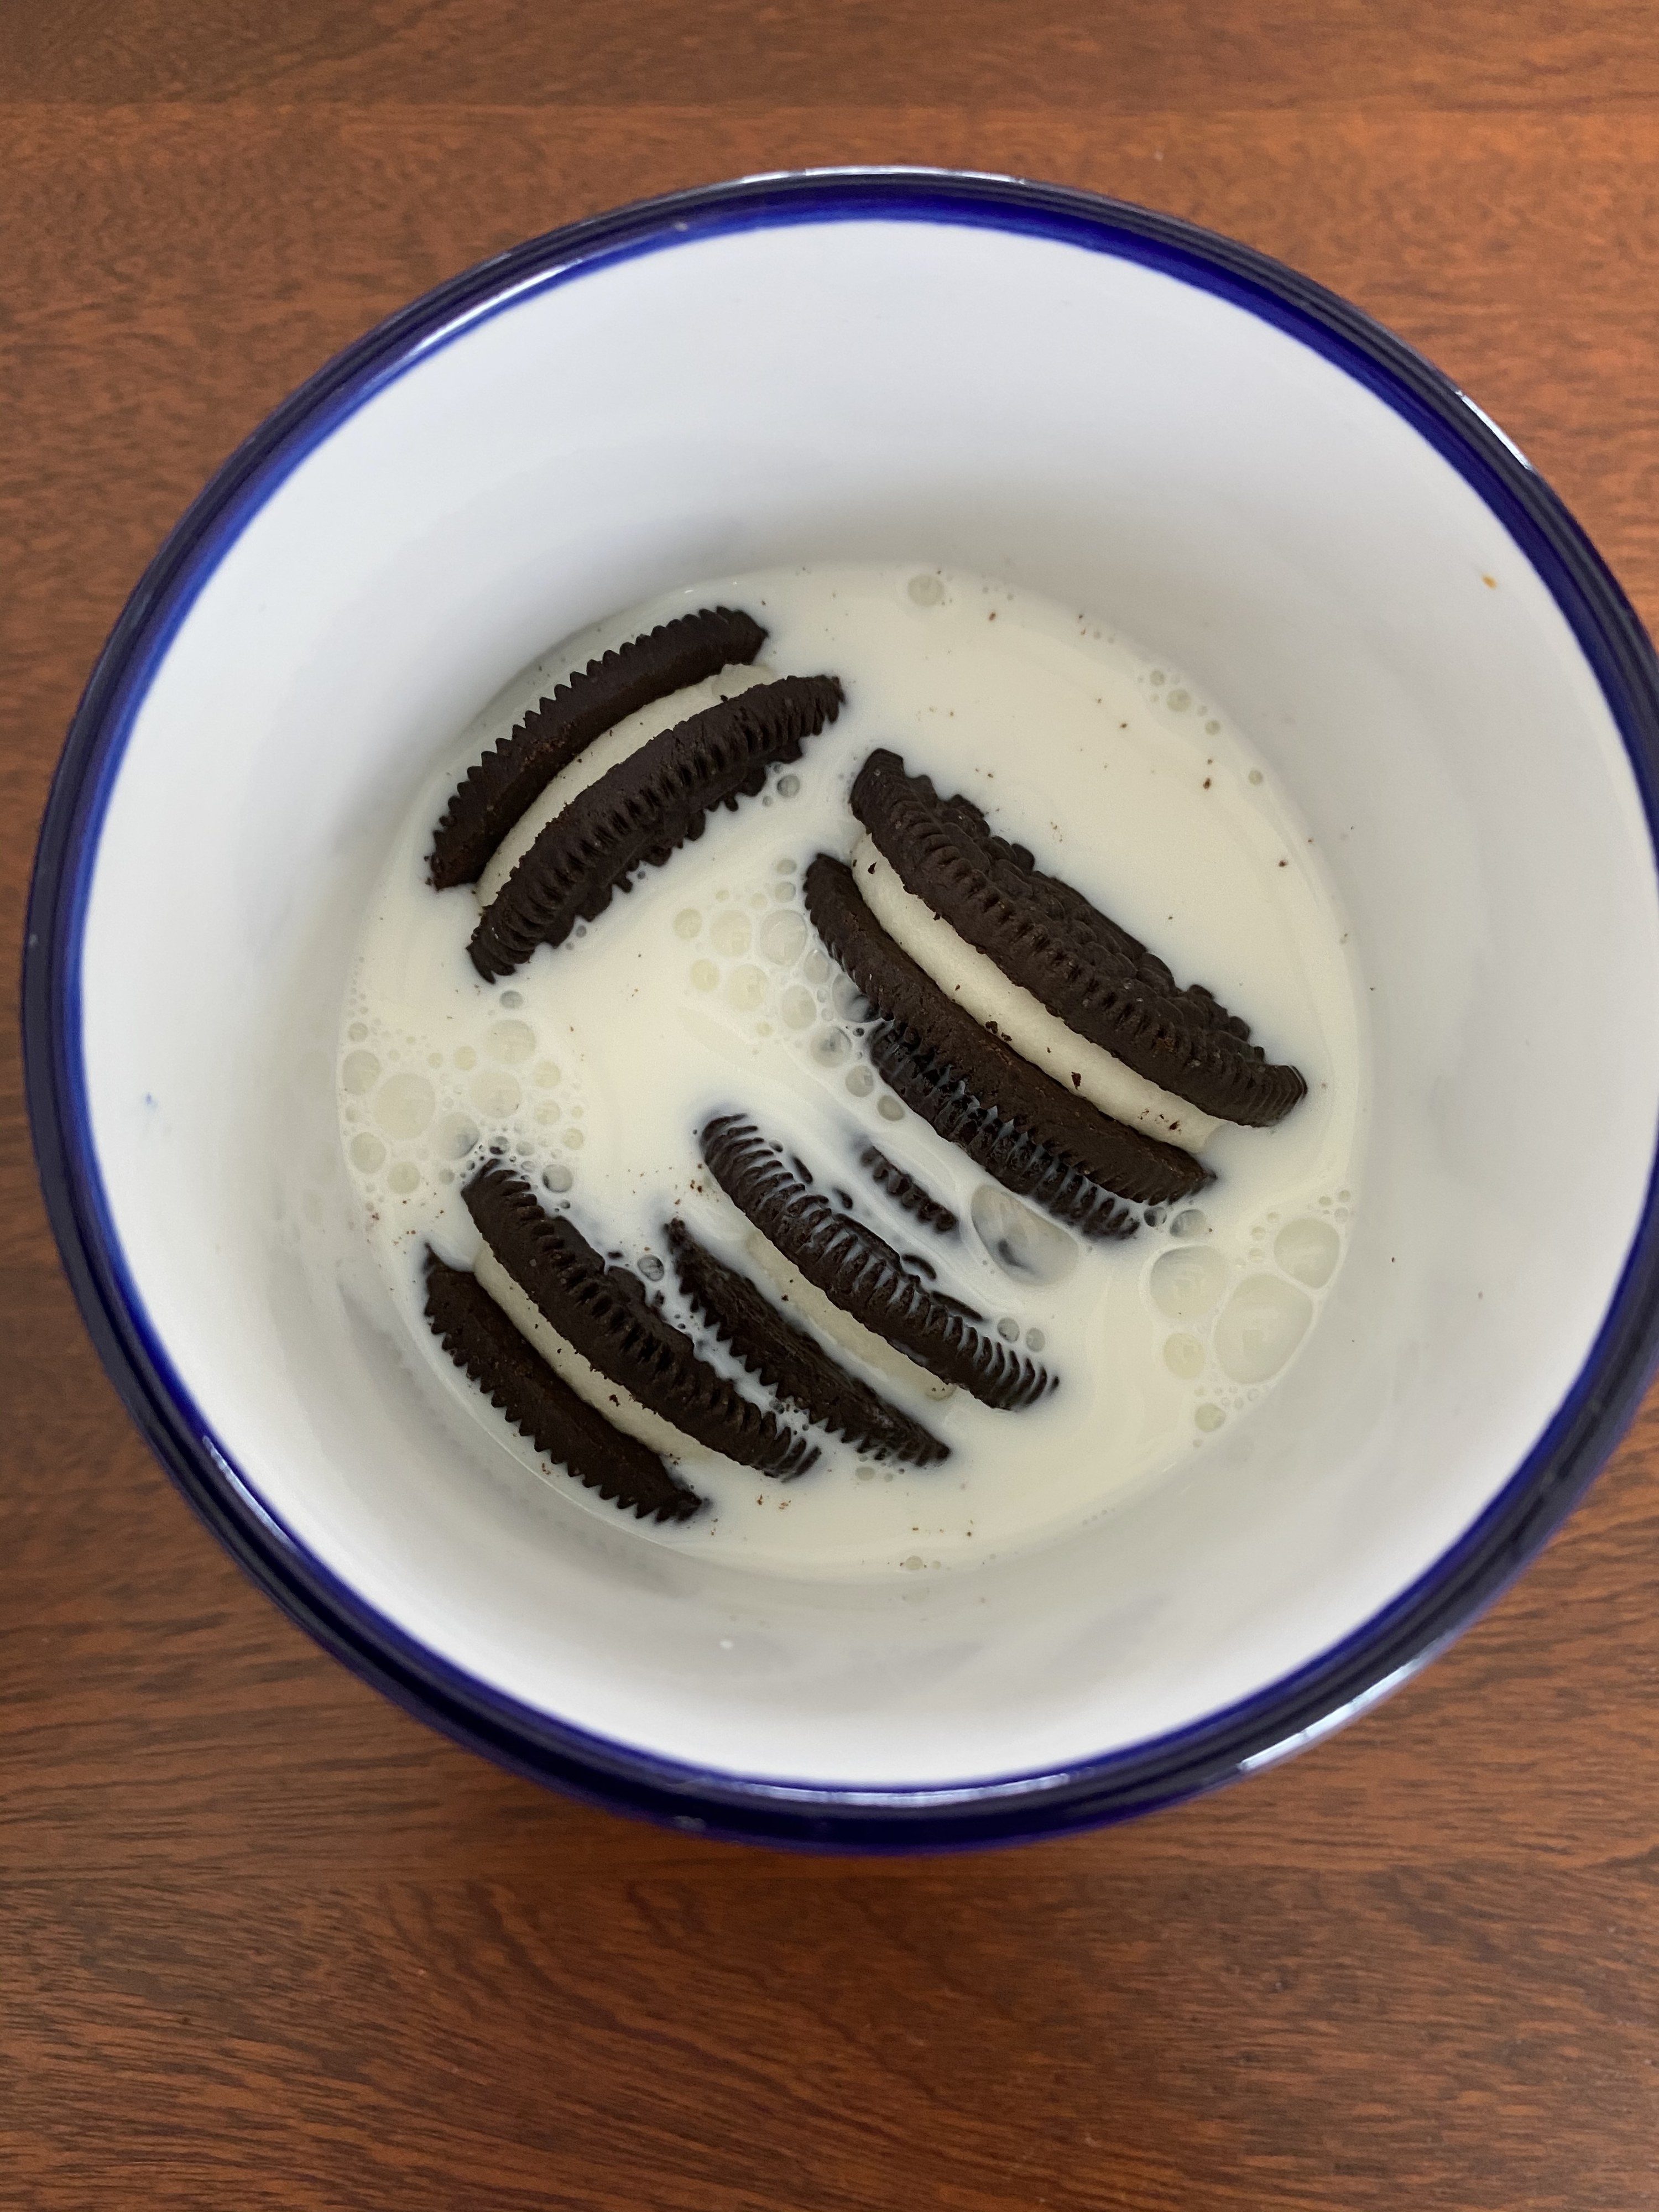 A handful of Oreo cookies submerged in milk in a mug.